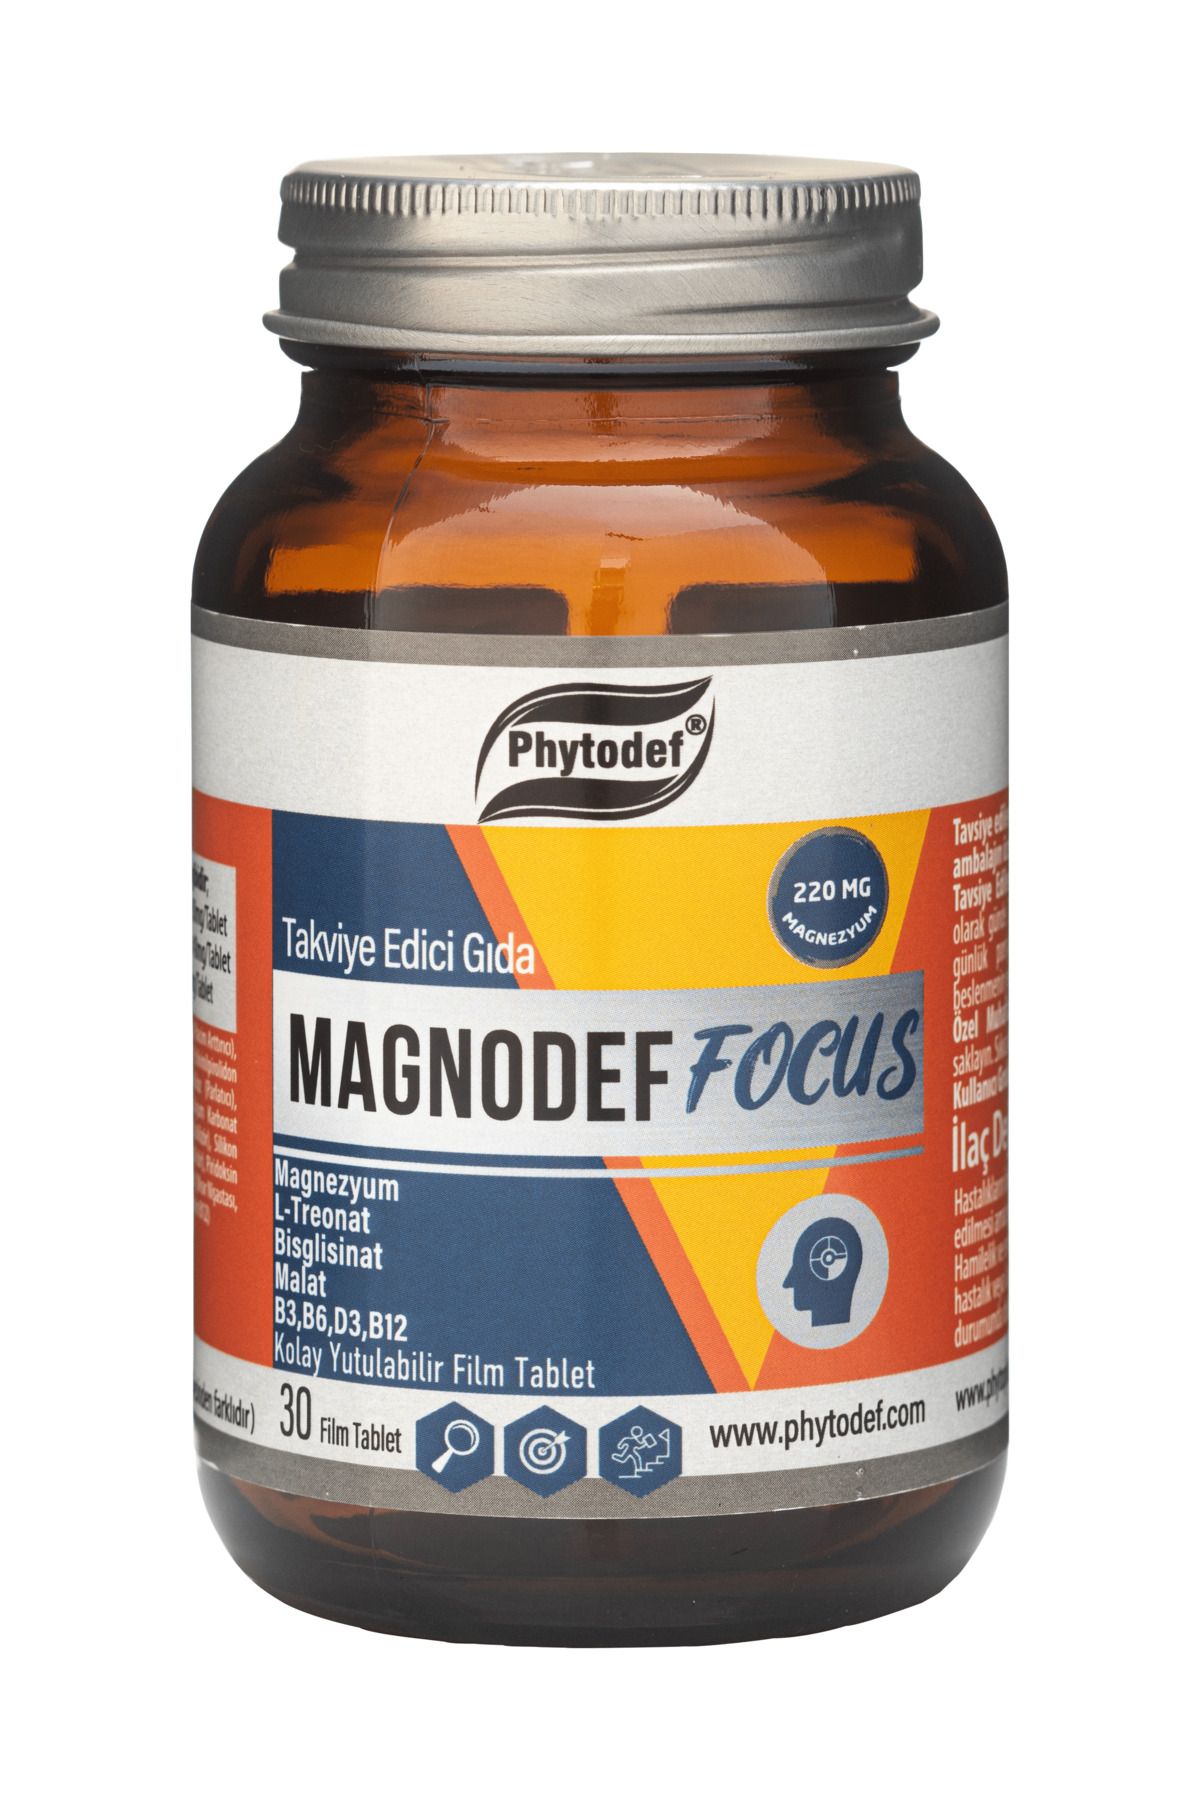 Phytodef Magnodef Focus Magnezyum L-Treonat Bisglisinat Malat 30 Film Tablet